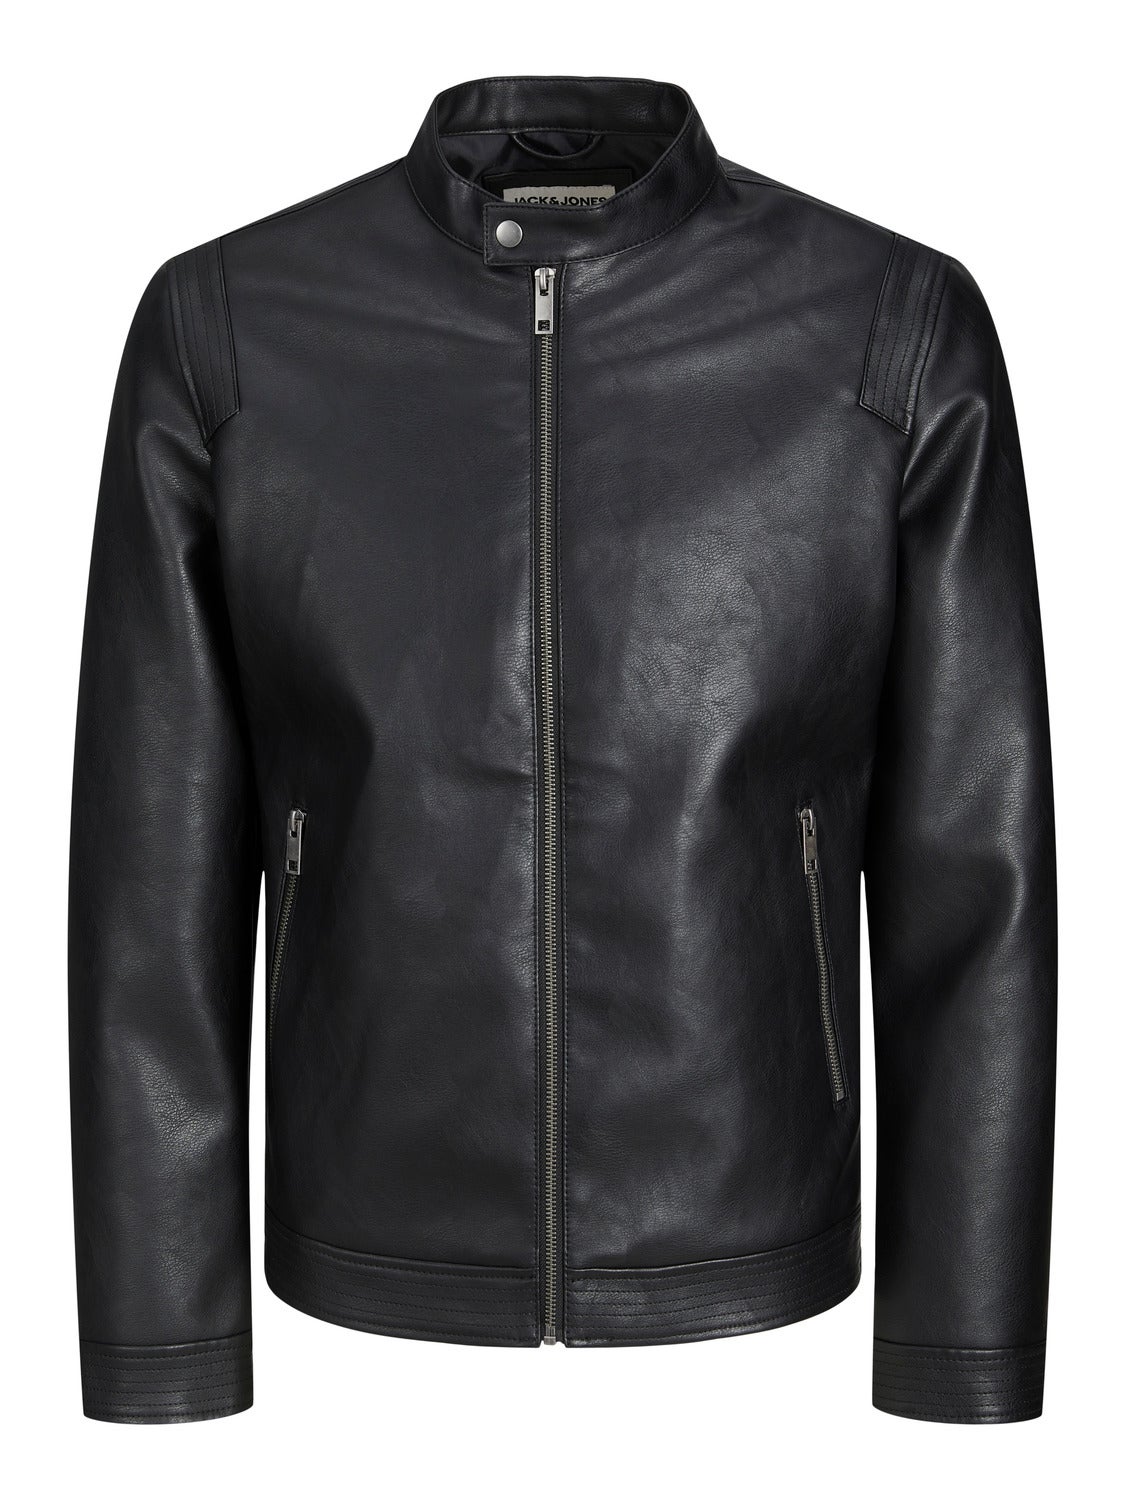 Buy Jack & Jones Men's Leather Jacket (1983701004_Black_X-Large) at